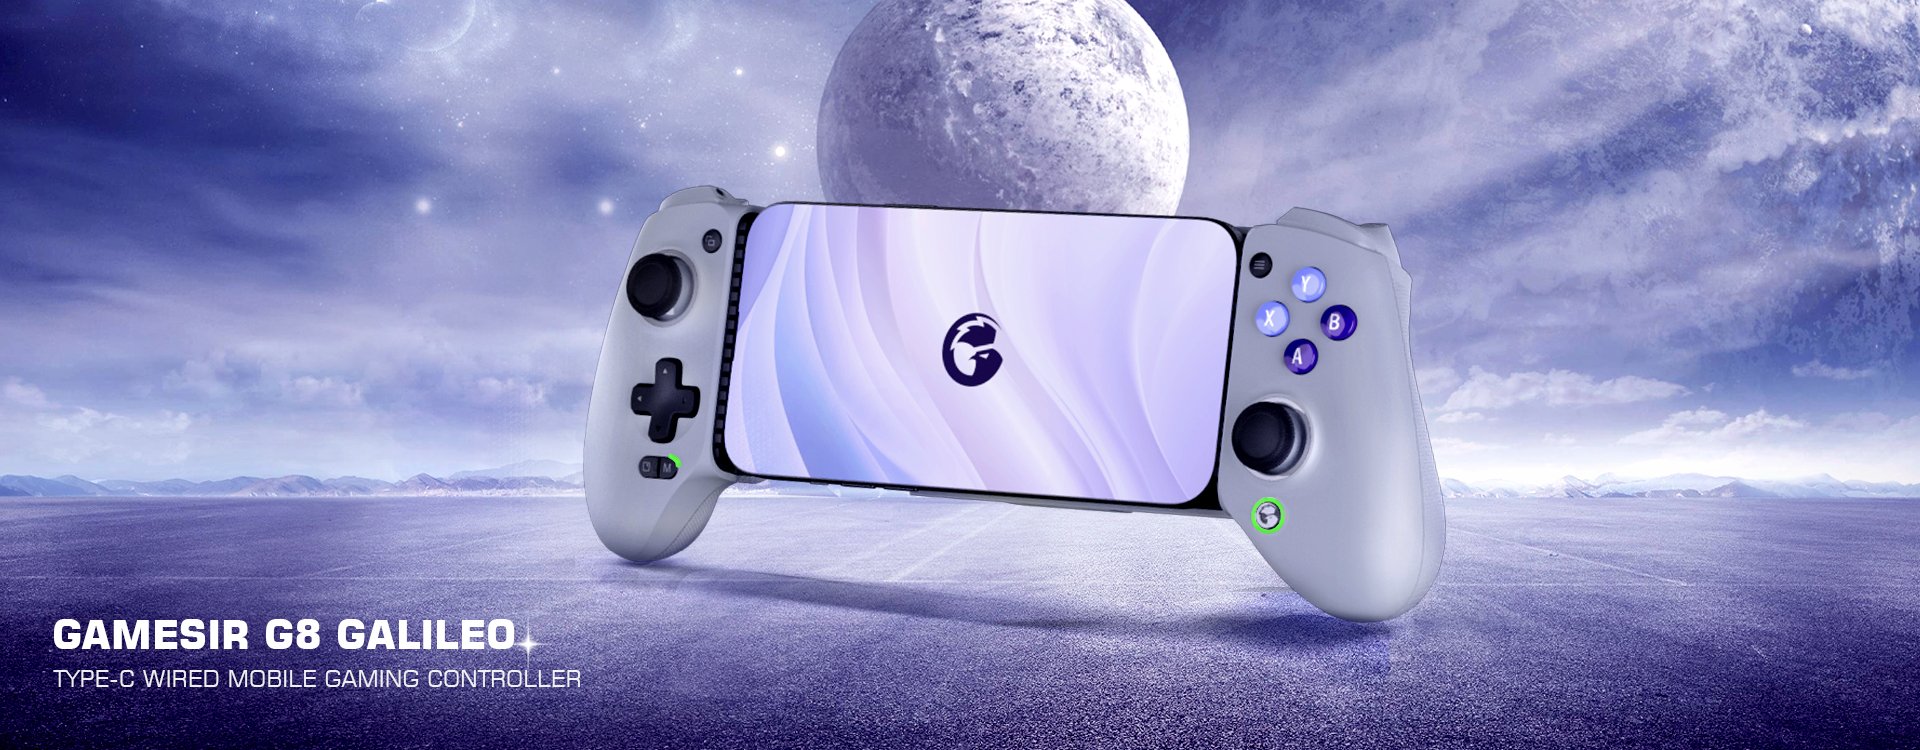 Mando Gamepad GameSir G8 Galileo - Atom Store